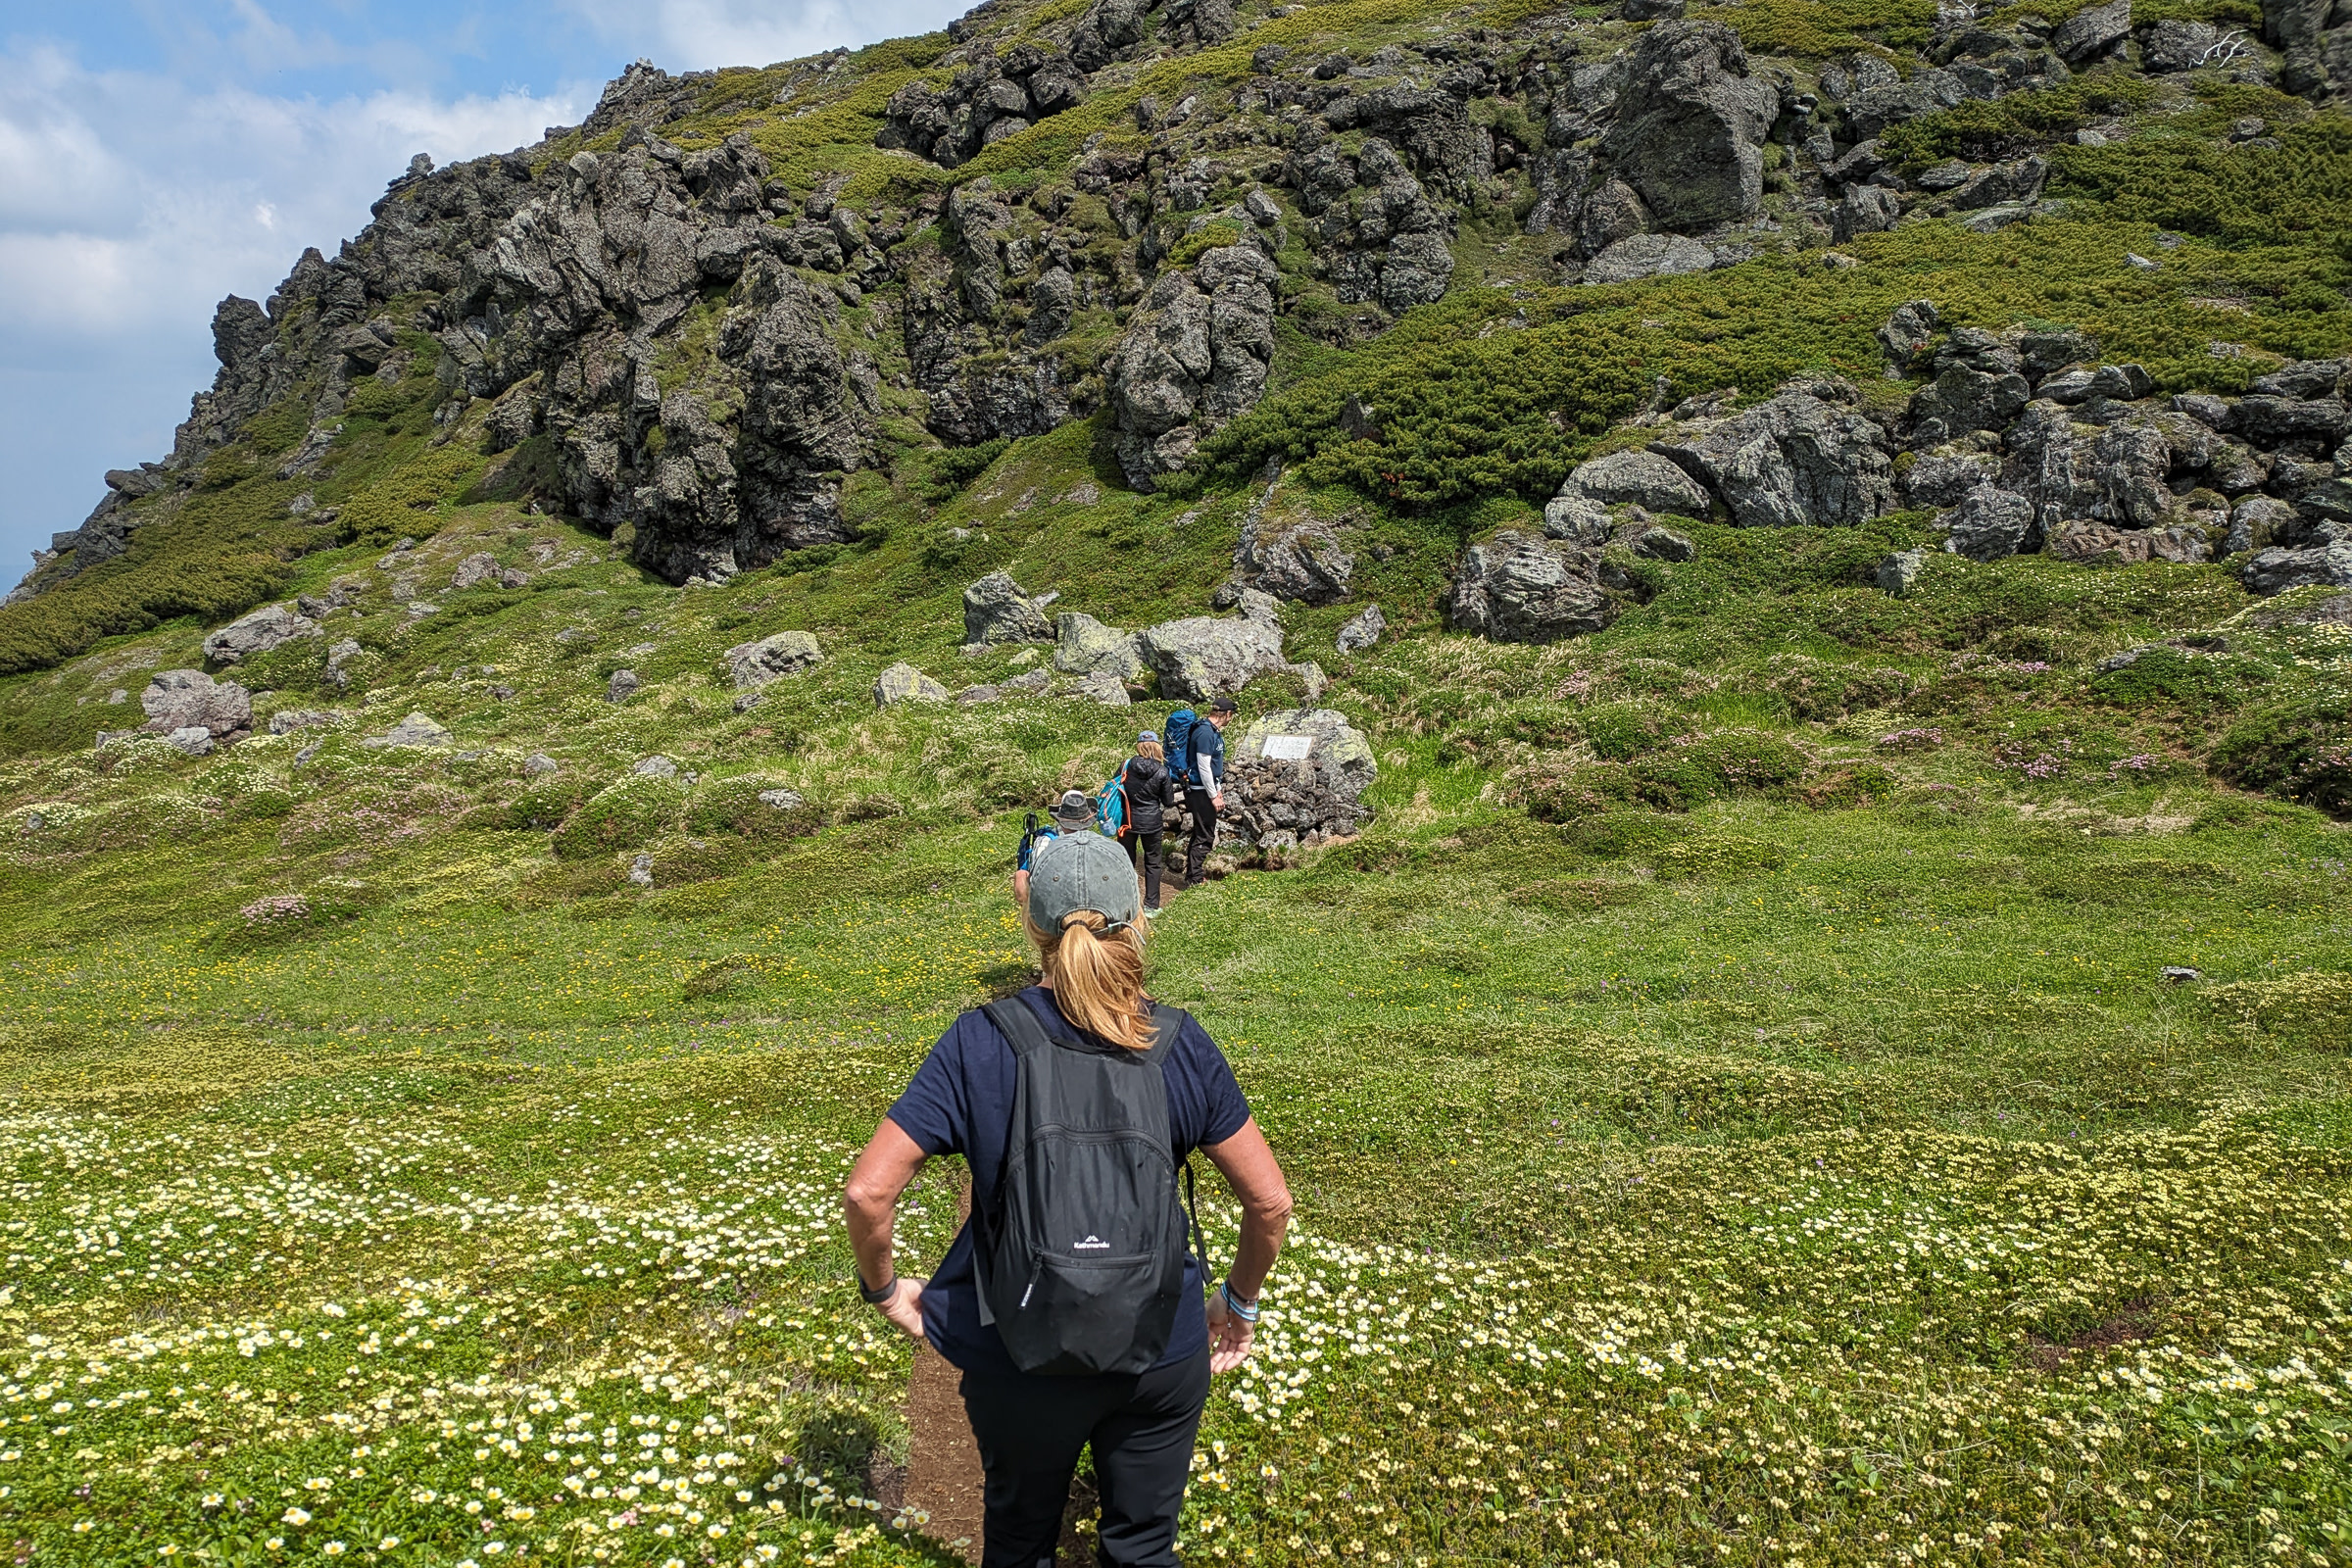 Hikers on the Asahidake to Kurodake traverse walk through a field of white flowers towards a rocky bluff.